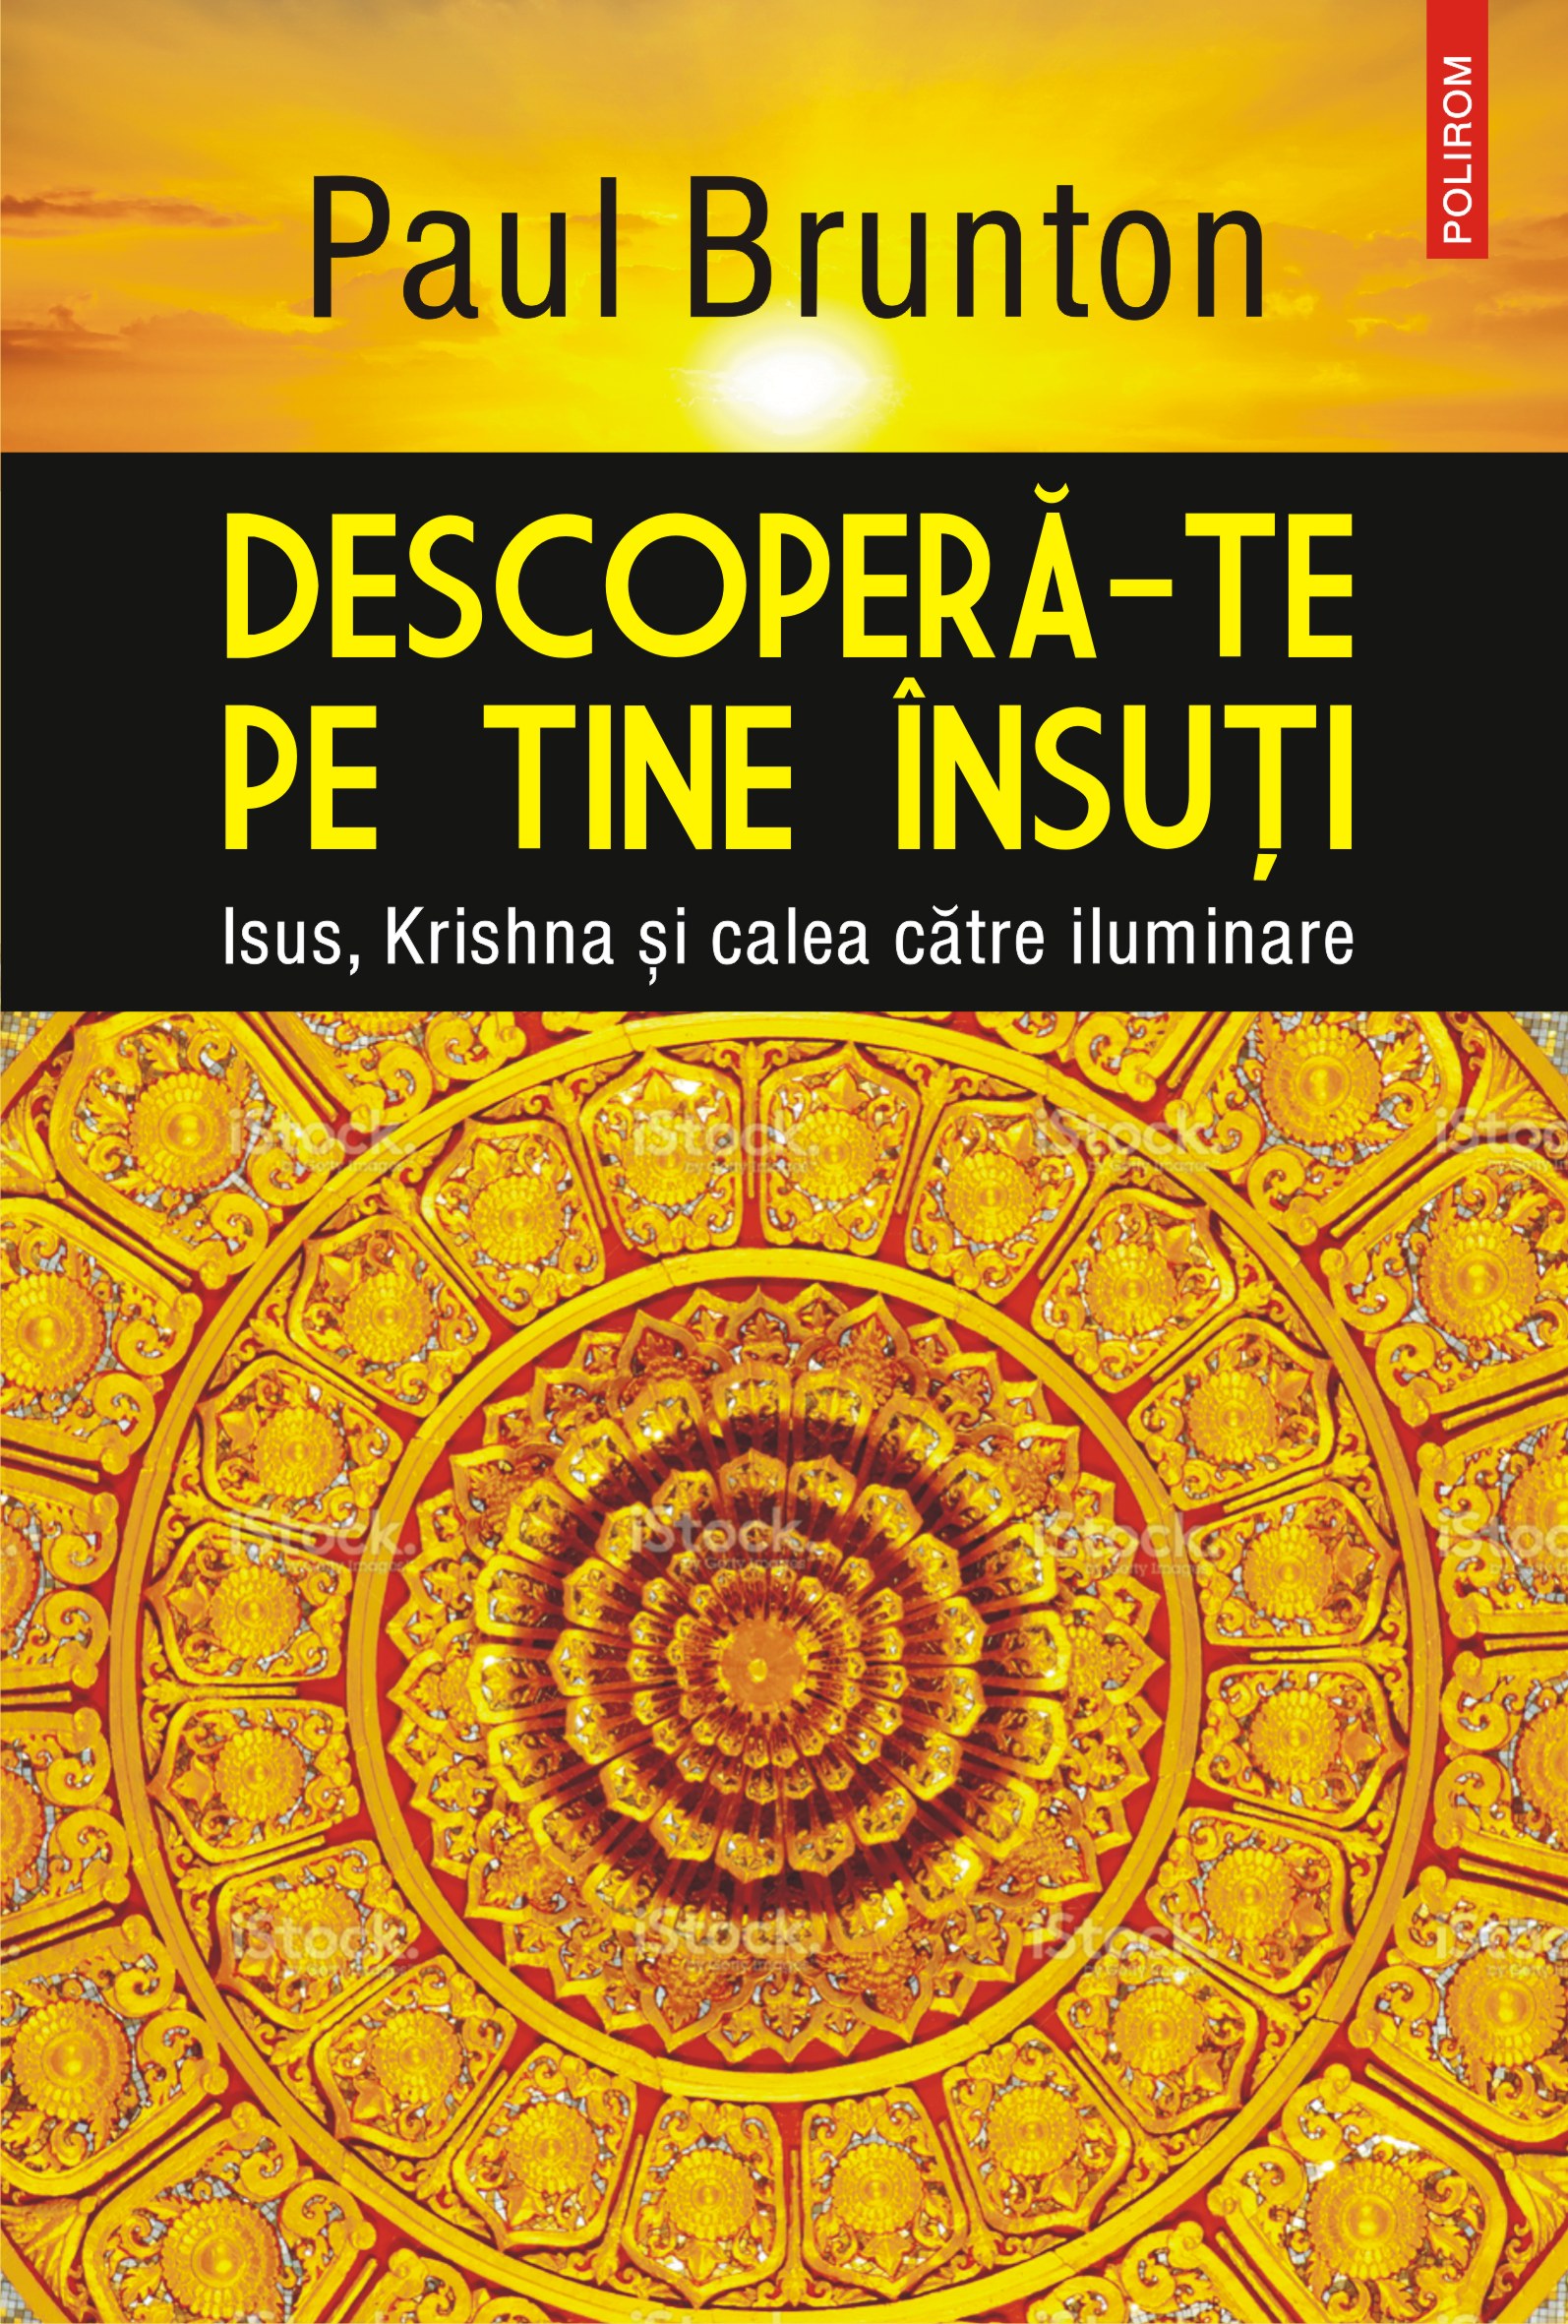 eBook Descopera-te pe tine insuti Iisus, Krishna si calea catre iluminare - Paul Brunton